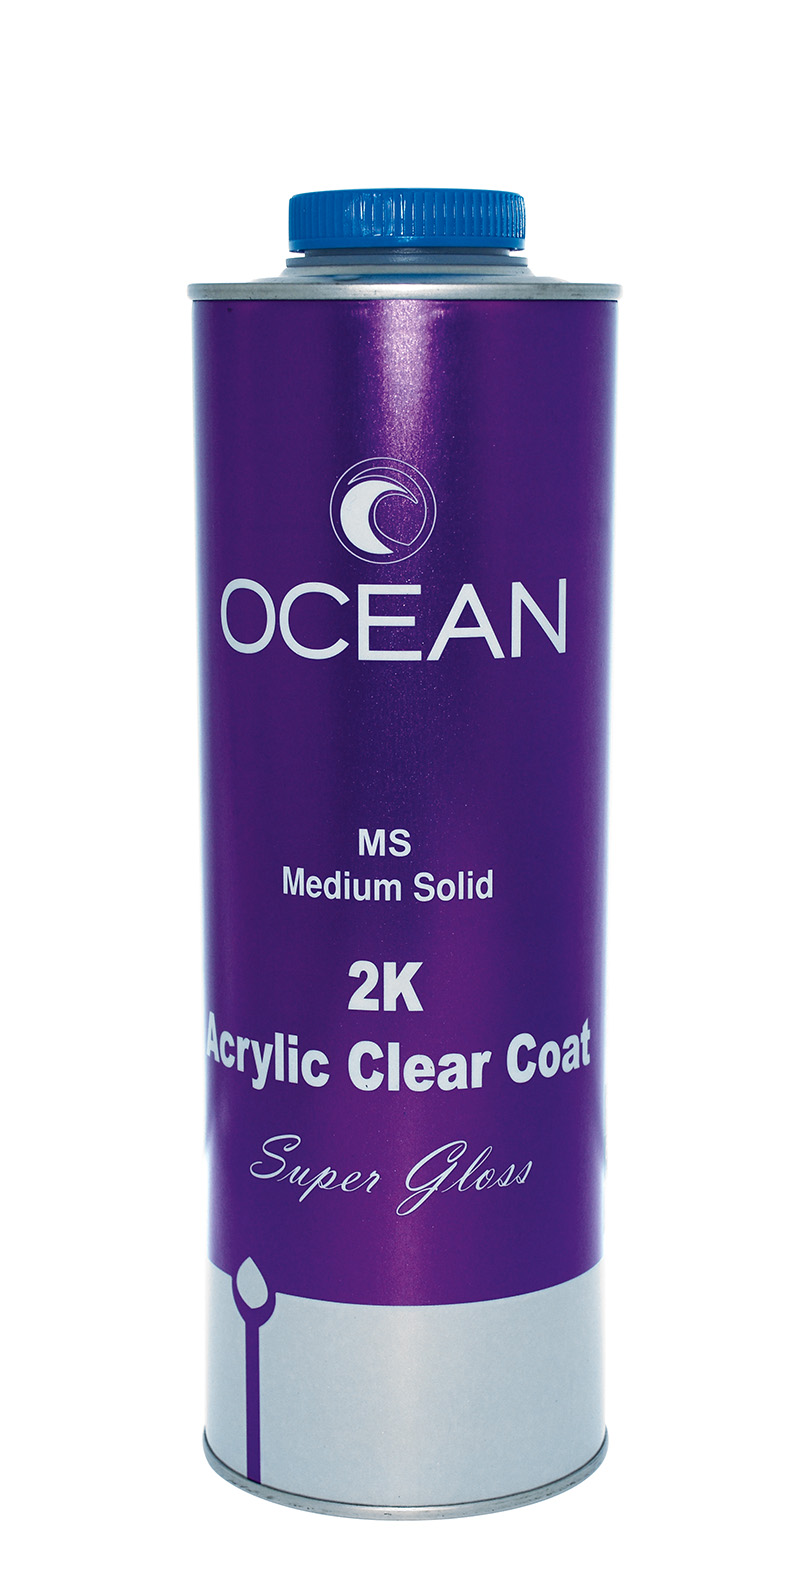 OCEAN MS 2K ACRYLIC CLEAR COAT